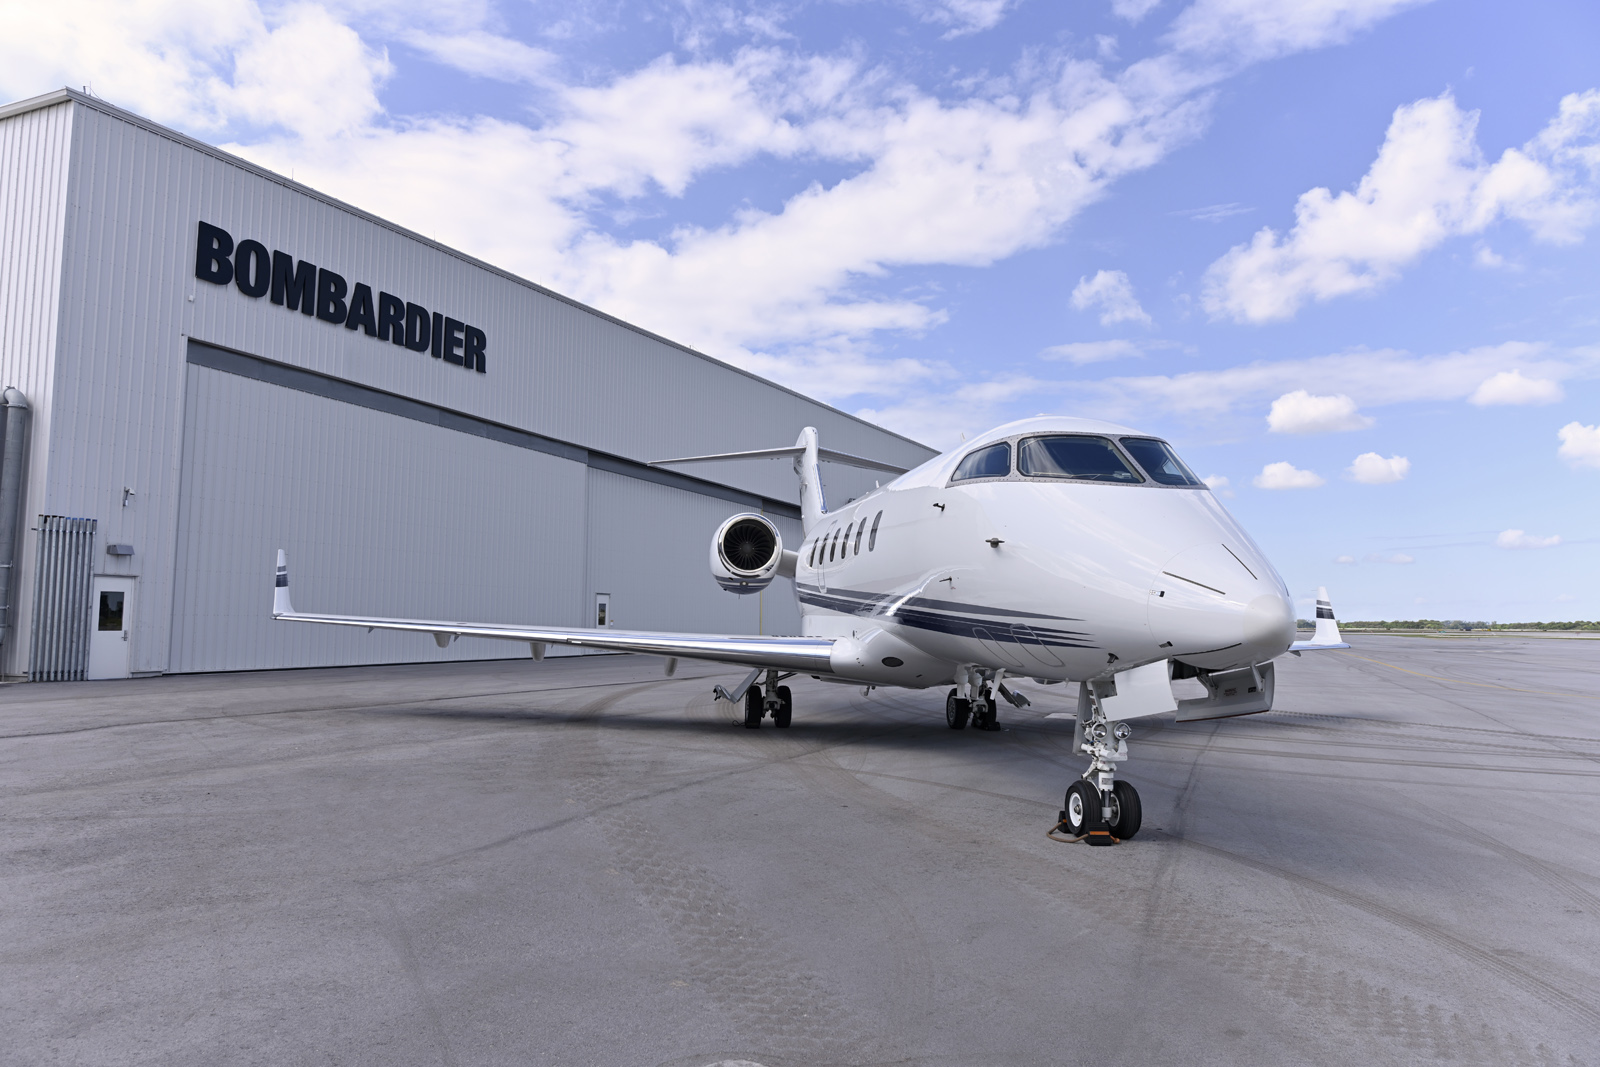 Bombardier_MiamiOpaLocka_PR_DSC8530_V3